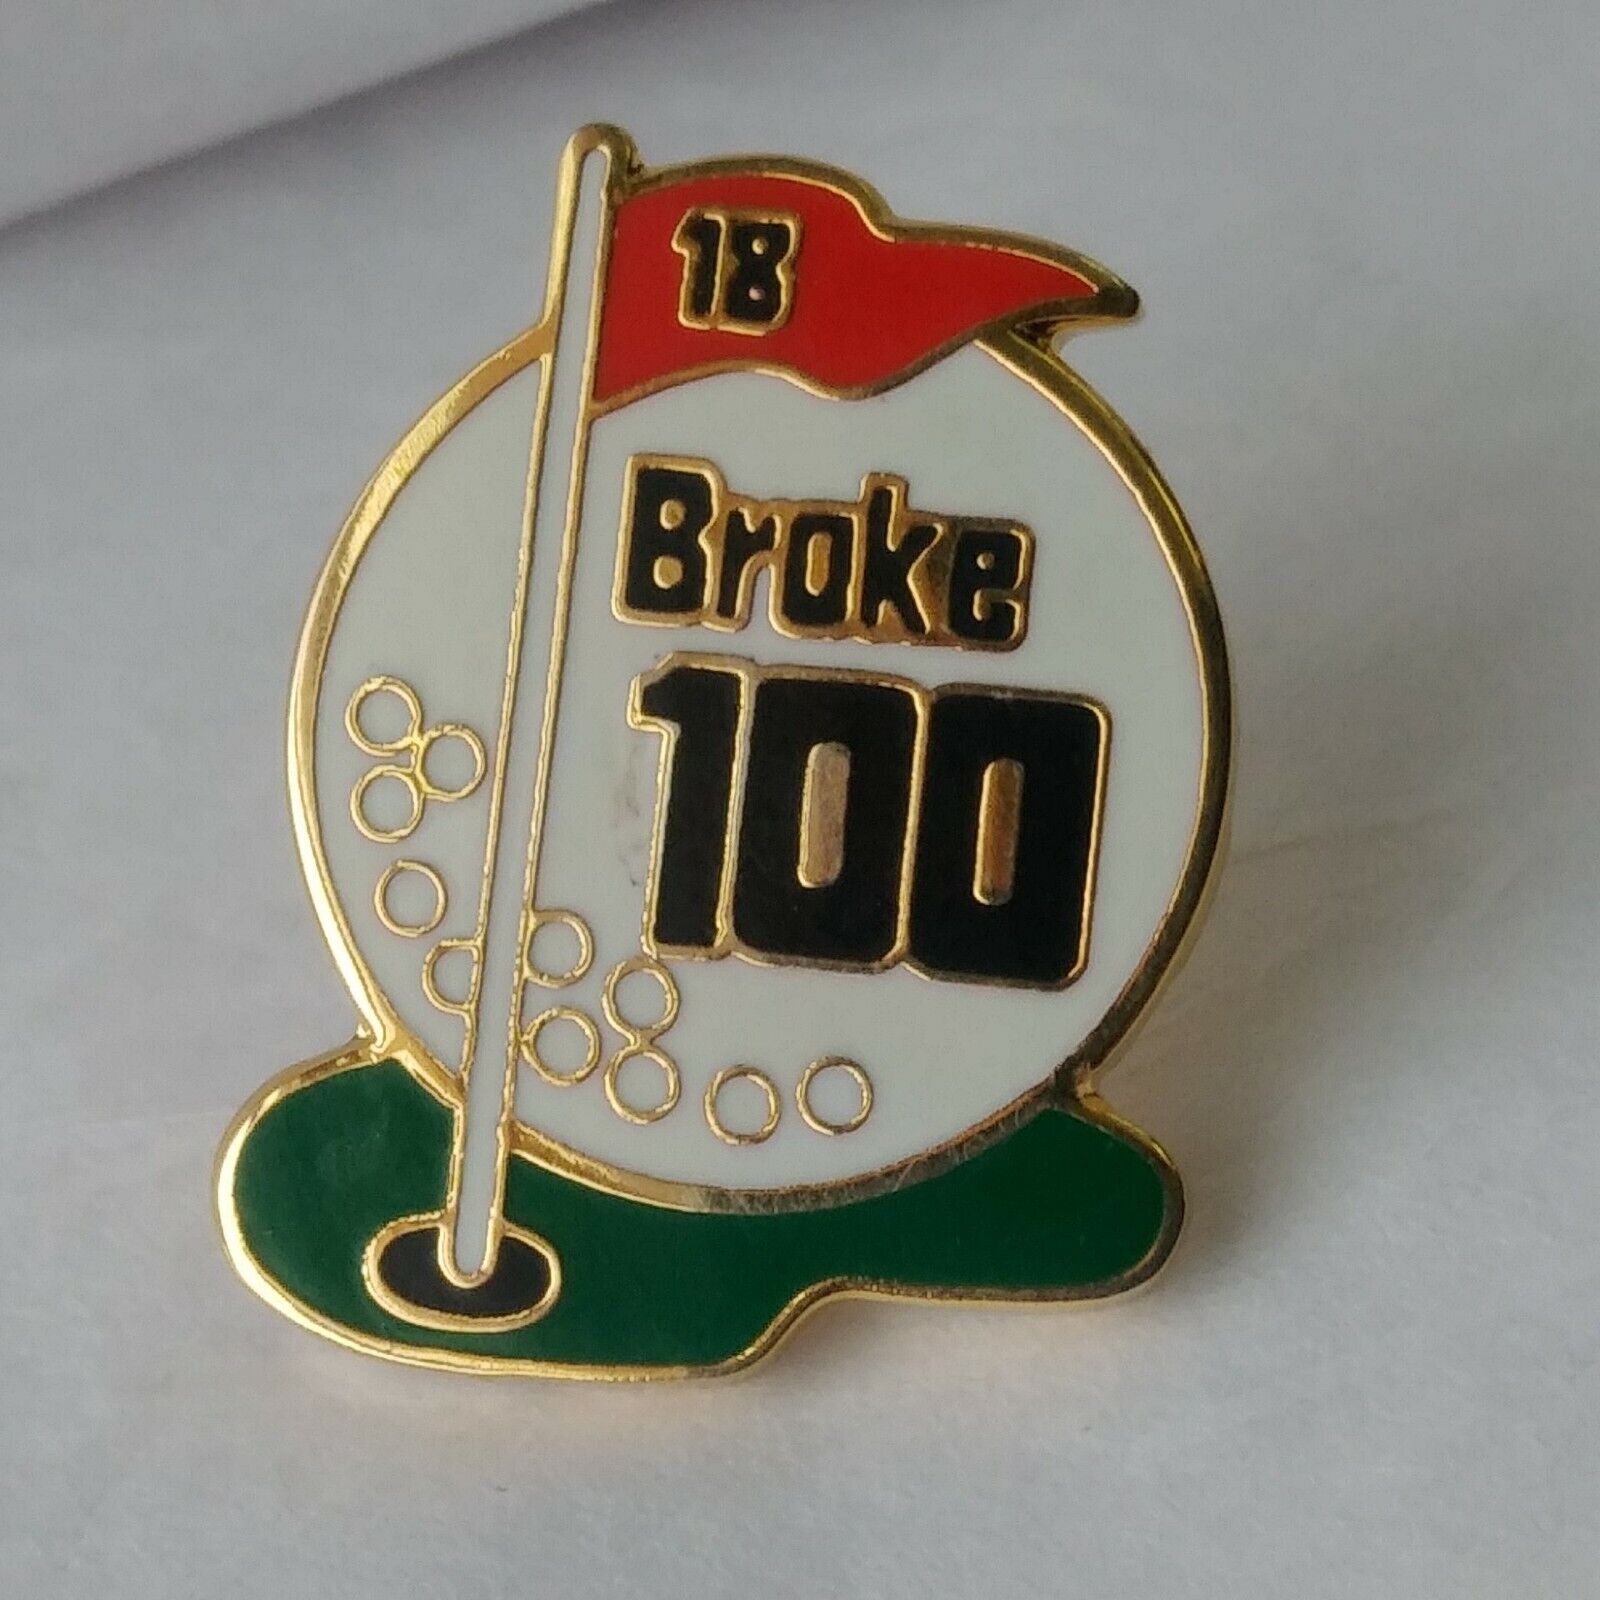 Broke 100 Lapel Hat Jacket Pin Golf Ball Putting Green 18th Hole Flag